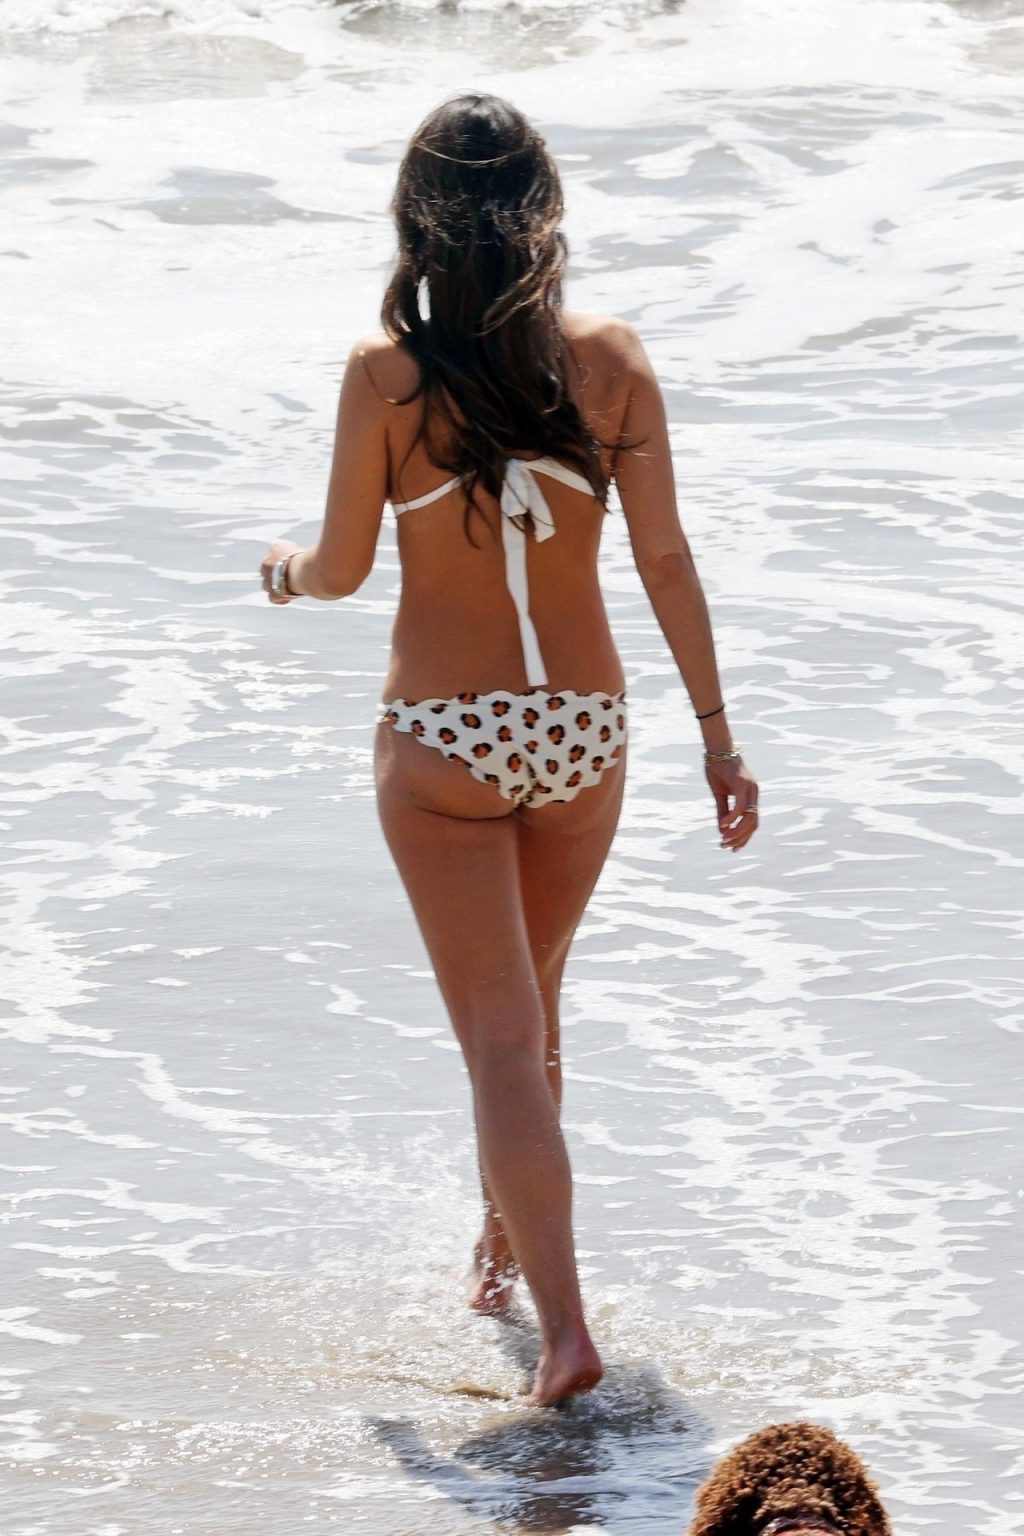 Jordana Brewster Looks Half Her Age Frolicking on the Beach (27 Photos)